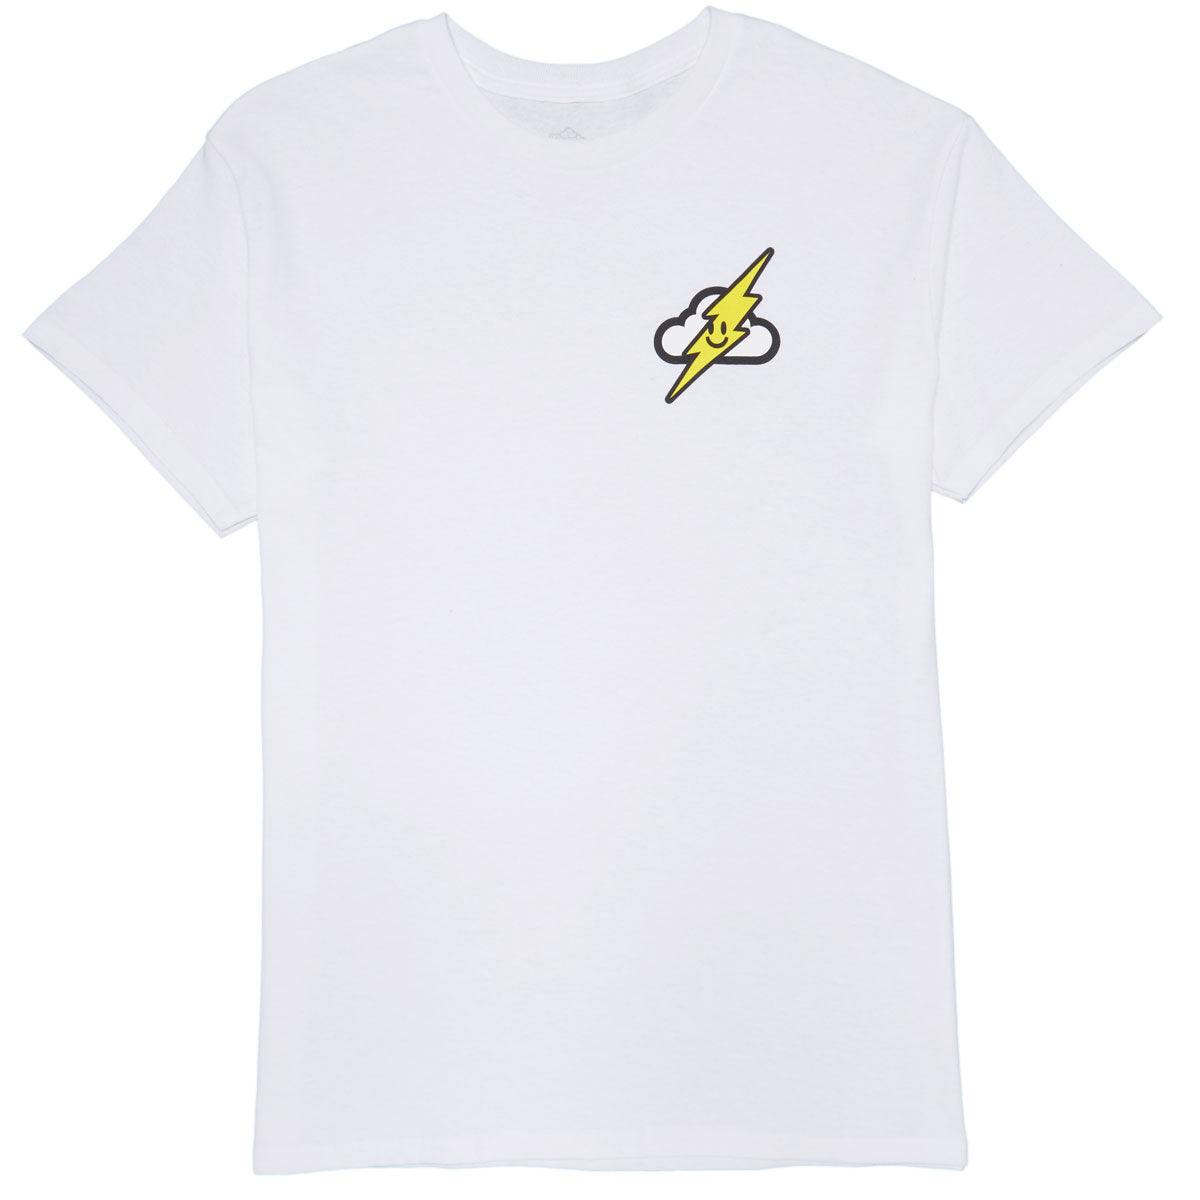 Thank You Flash Cloud T-Shirt - White image 1